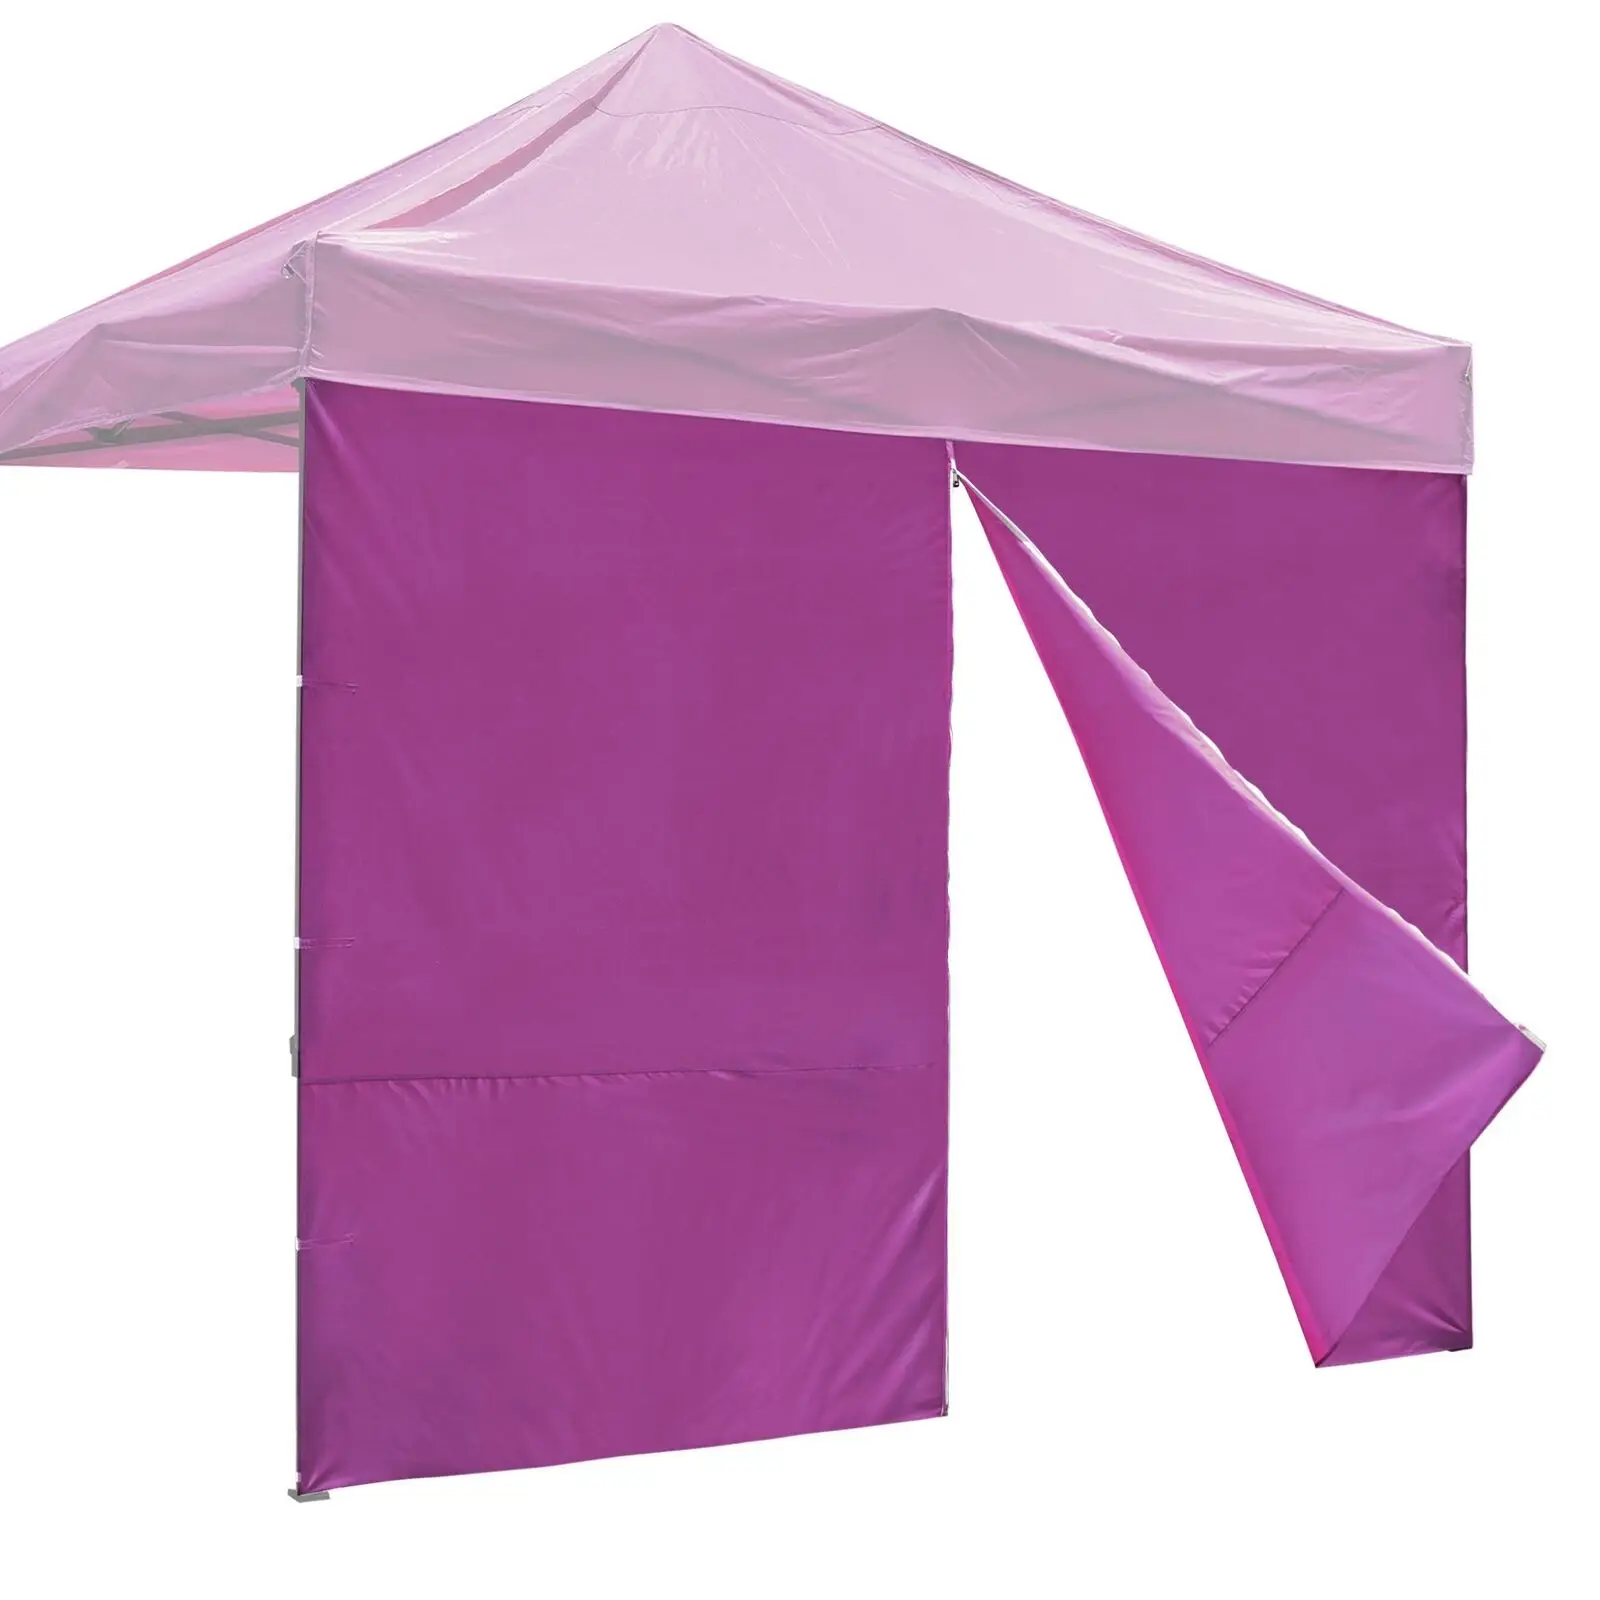 10x7 Ft UV30+ Protection Canopy Gazebo Zipper Full Size Side Wall/Purple